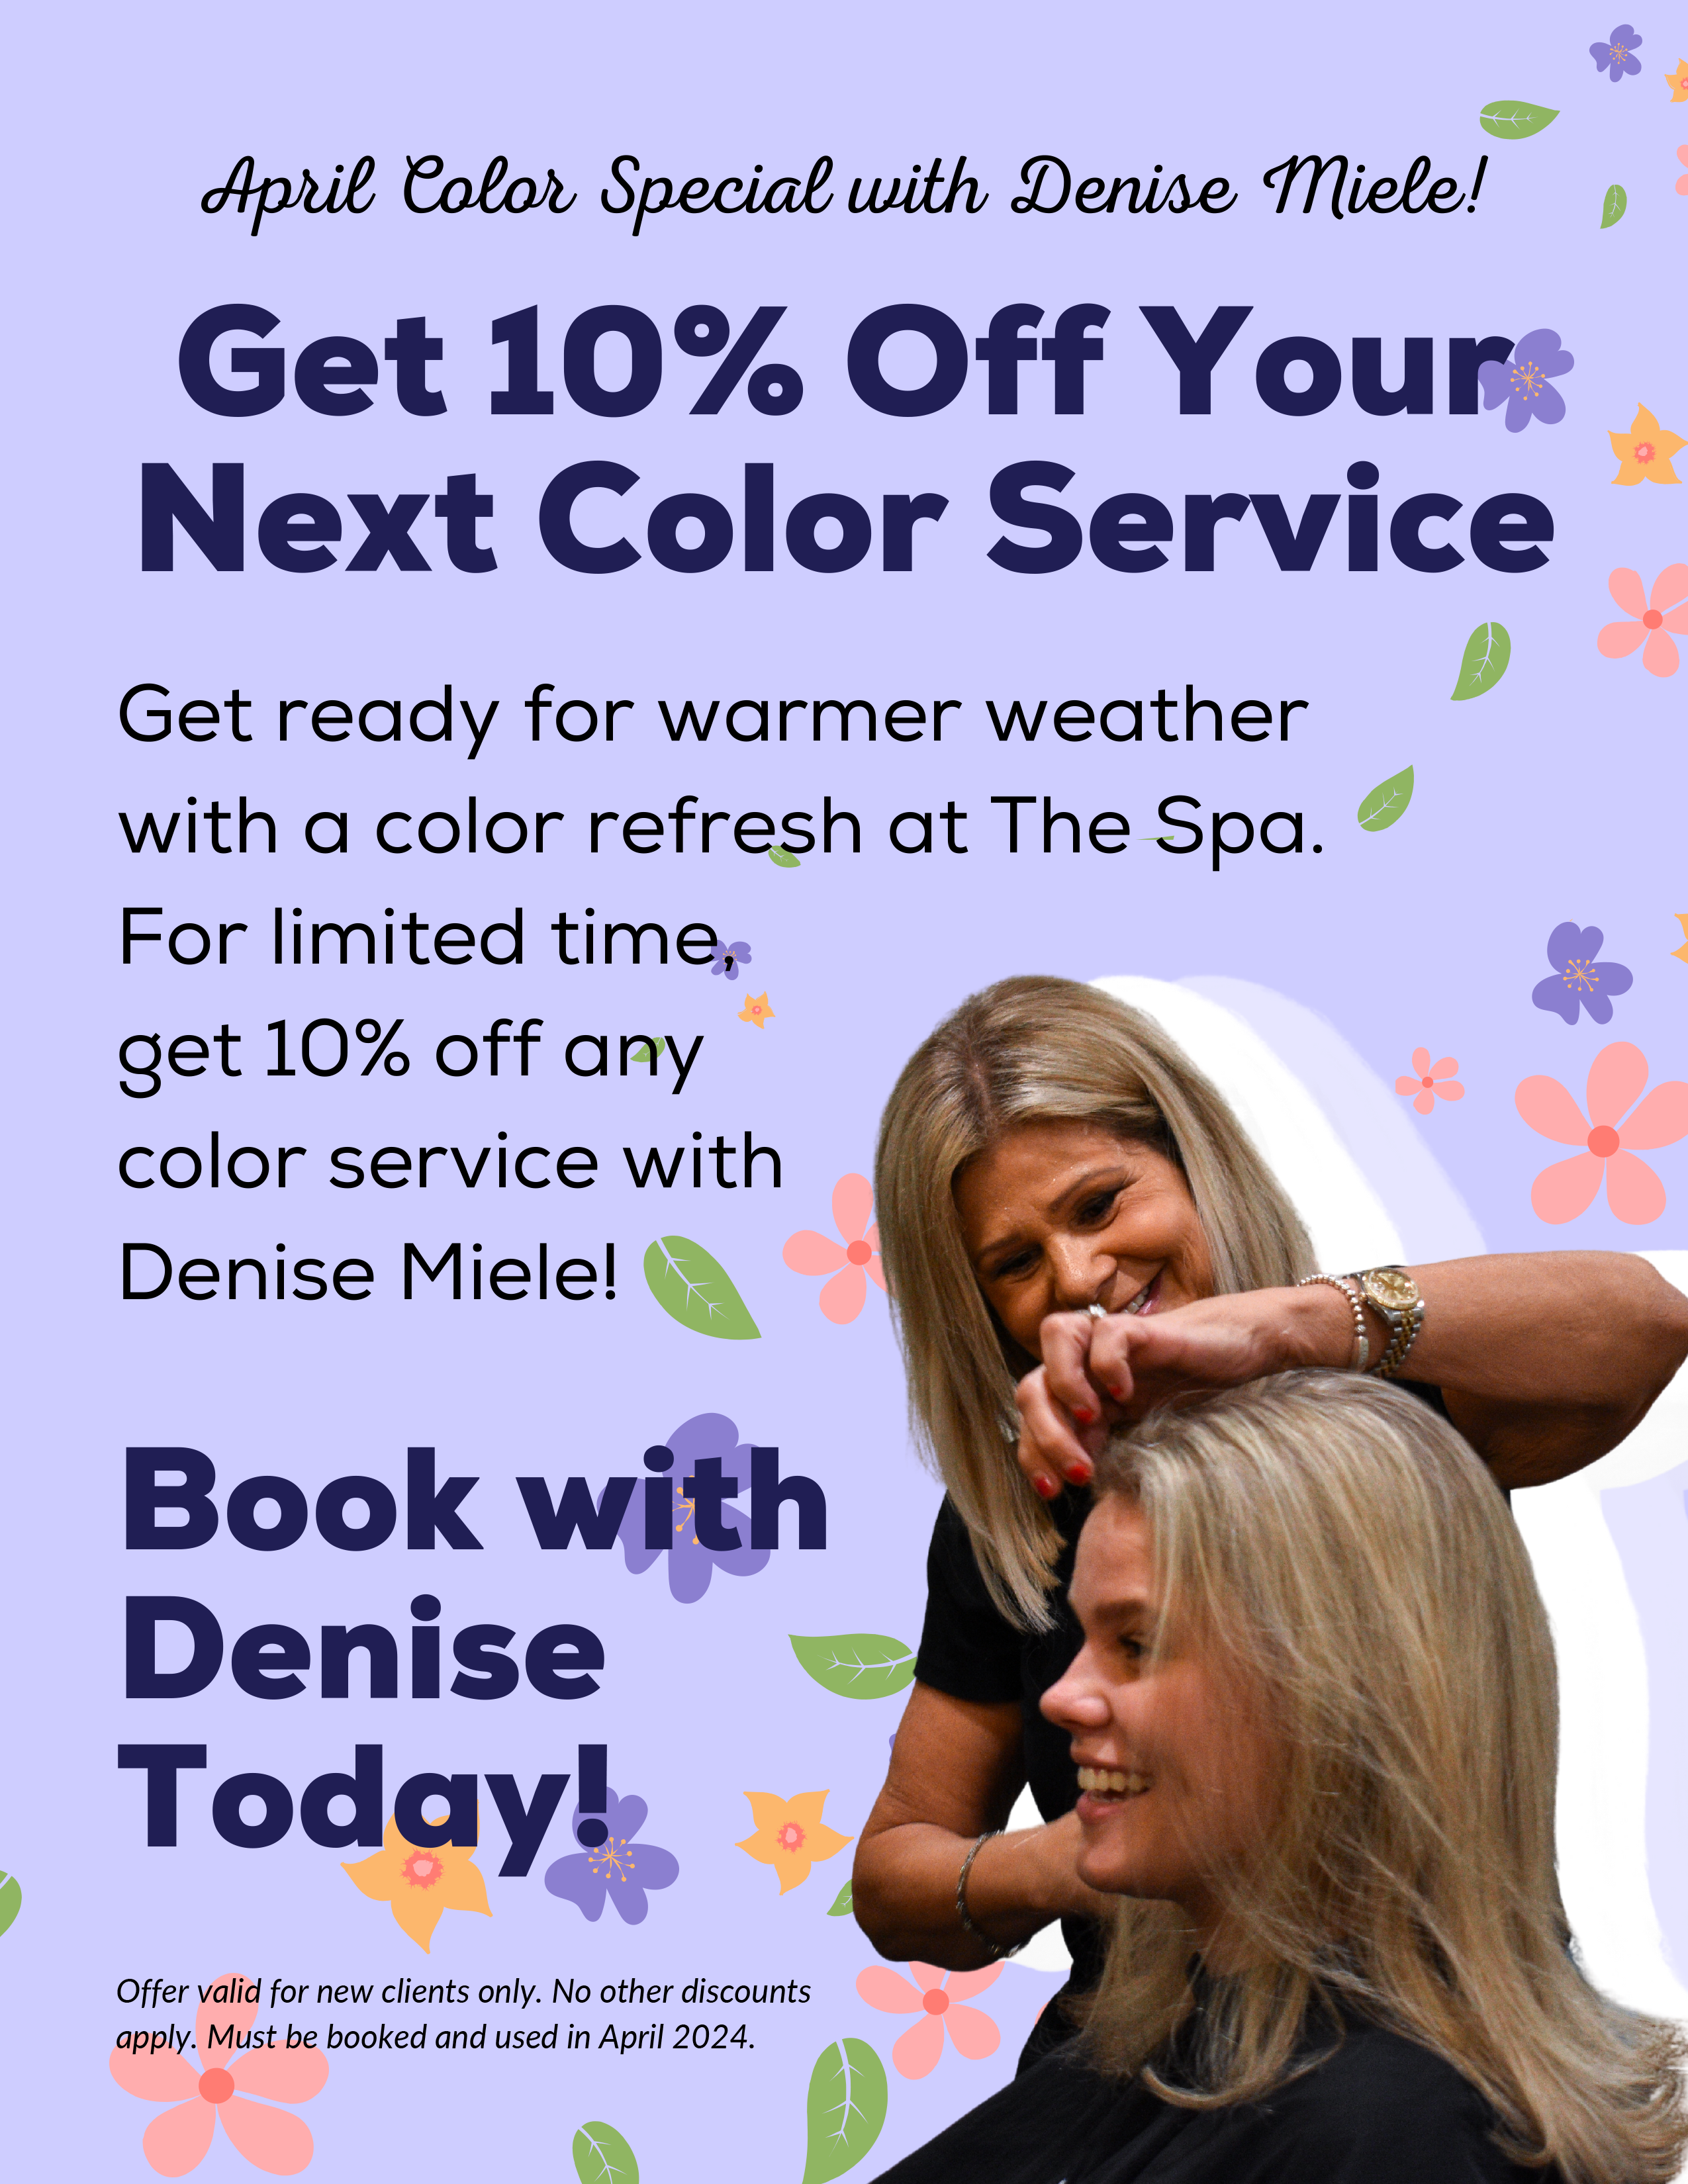 Wheaton Sport Center Spa Promos - Denise Miele Discount 10% off next color service.